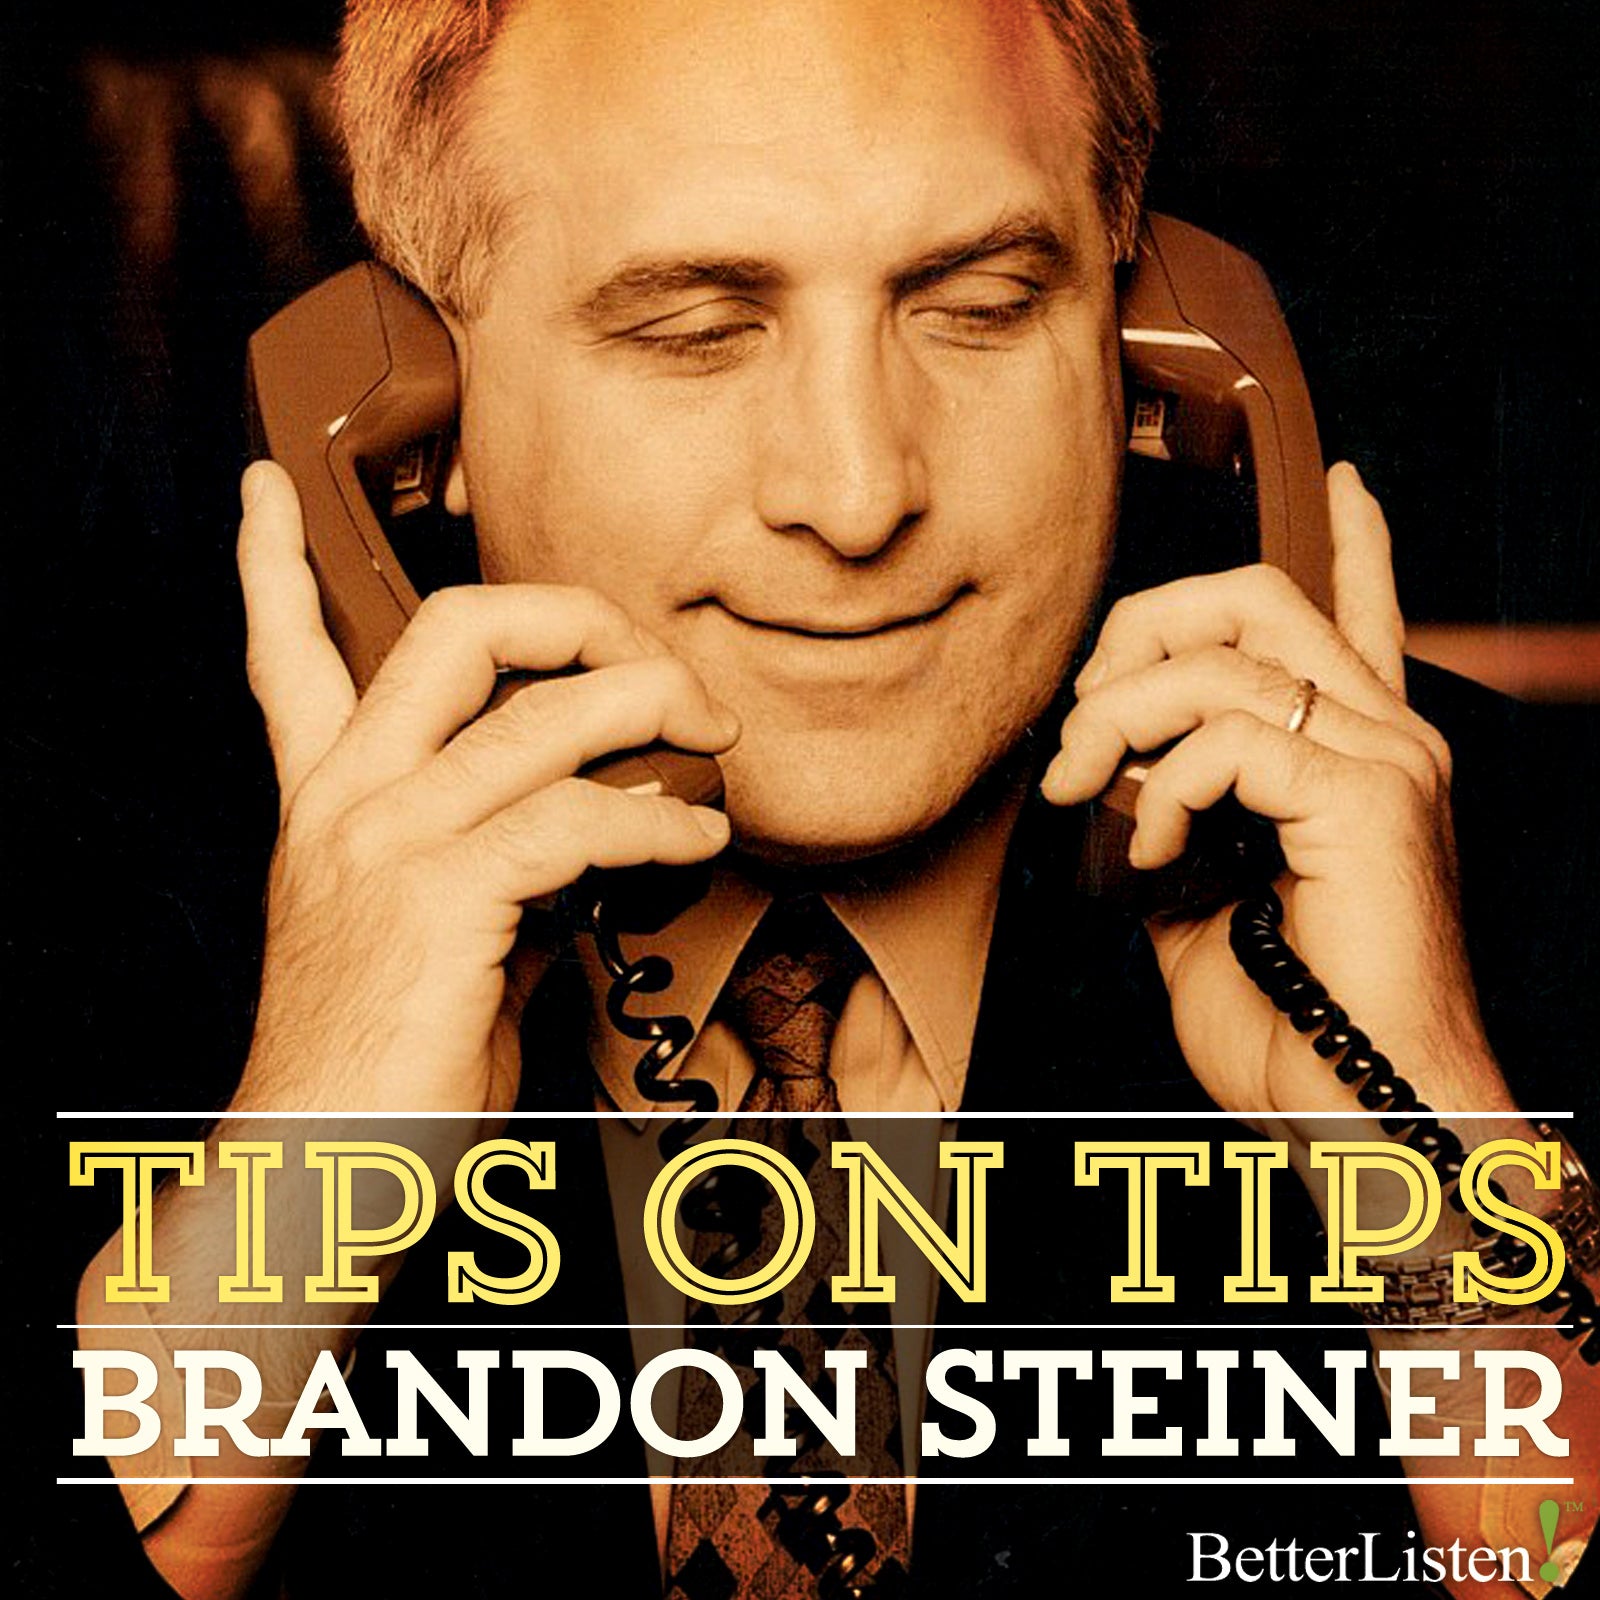 Tips on Tips Seminar with Brandon Steiner Audio Program BetterListen! - BetterListen!